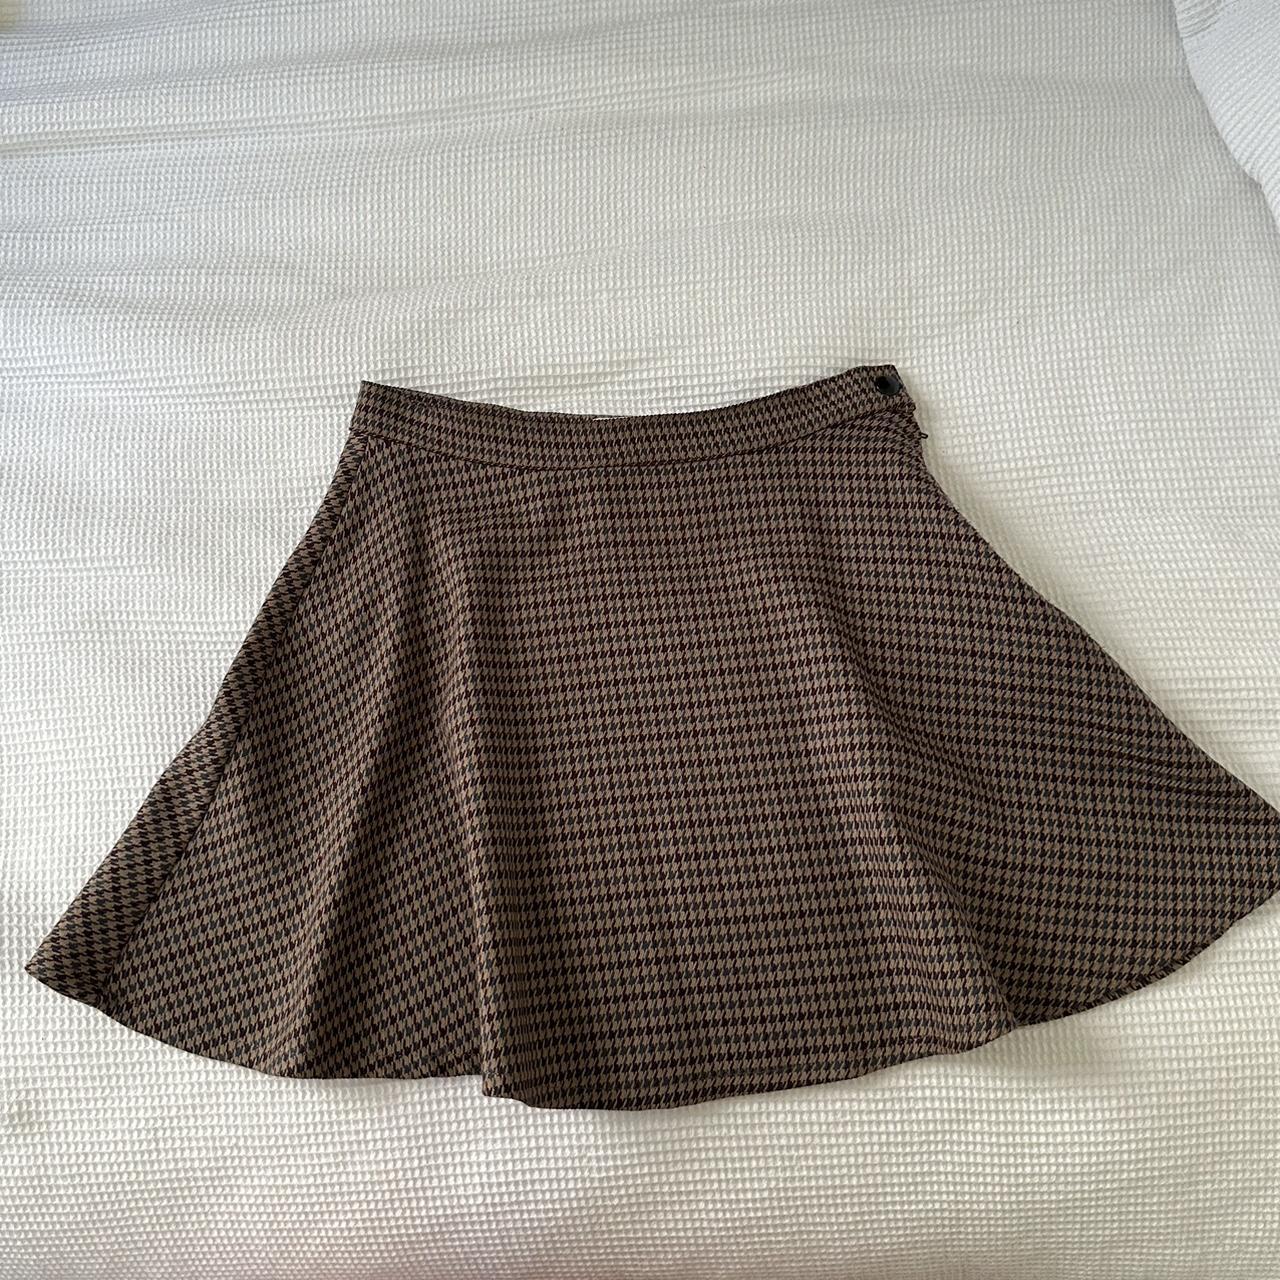 American Apparel Women's Brown Skirt